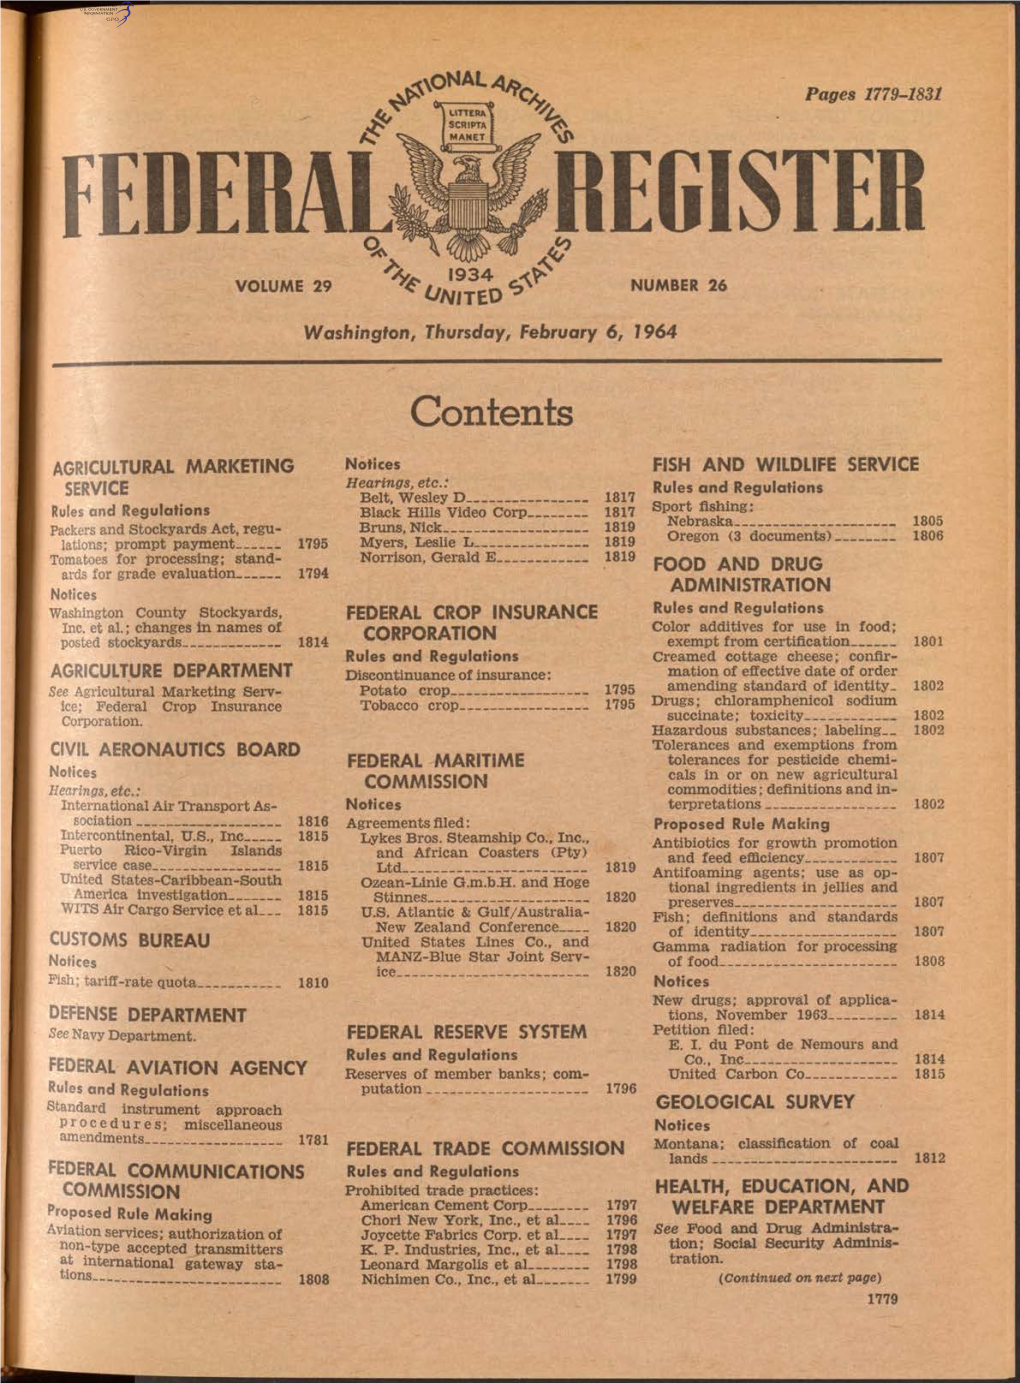 FEDERAL REGISTER \ 1 9 3 4 ^ VOLUME 29 NUMBER 26 ^ A/I T E D ^ Washington, Thursday, February 6, 1964